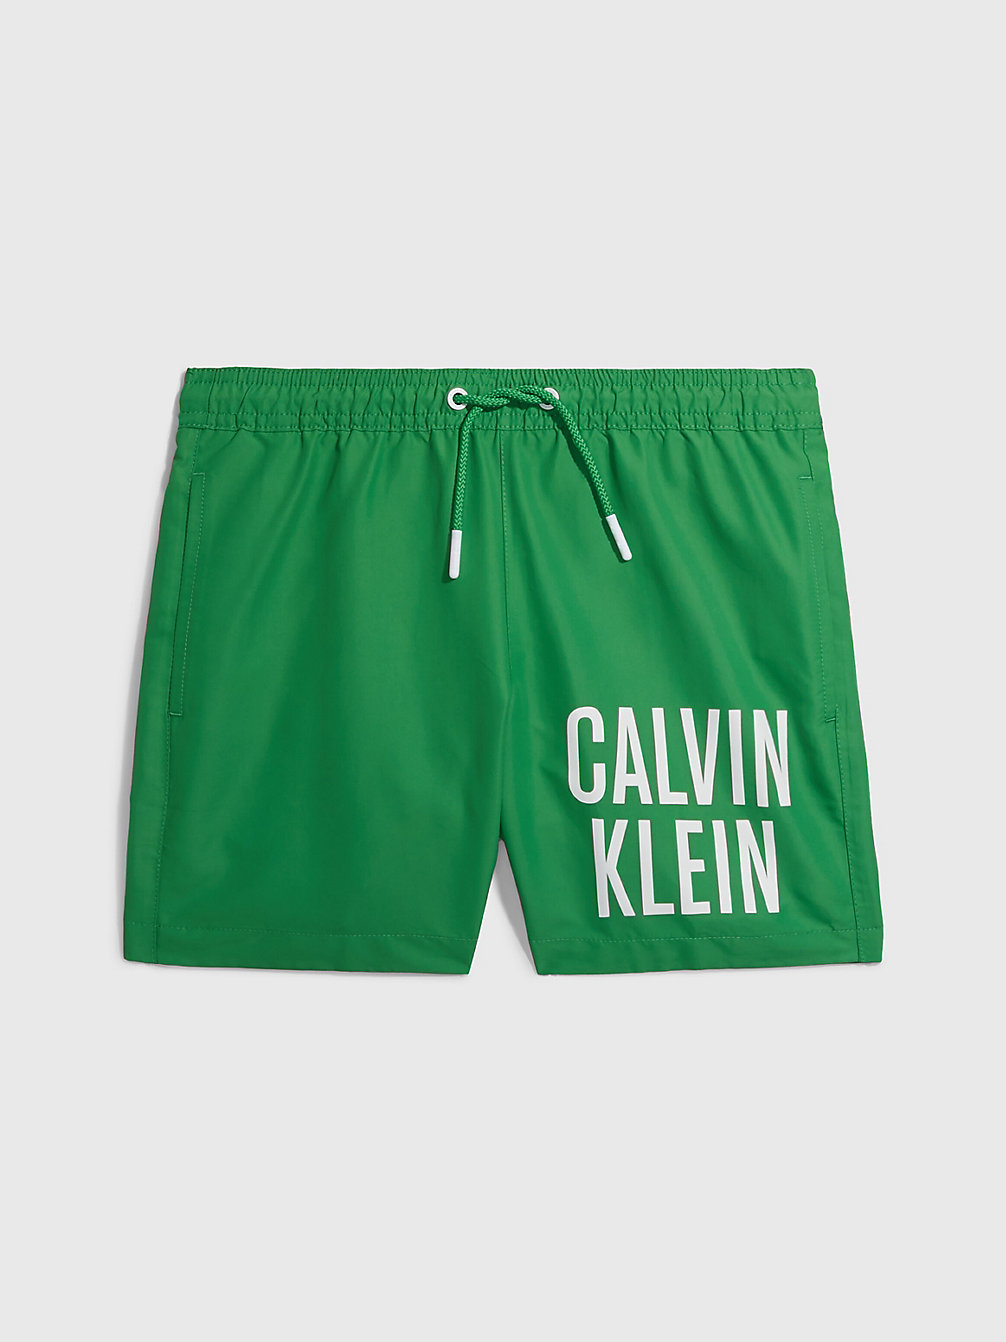 GREEN APPLE > Boys Swim Trunks - Intense Power > undefined boys - Calvin Klein